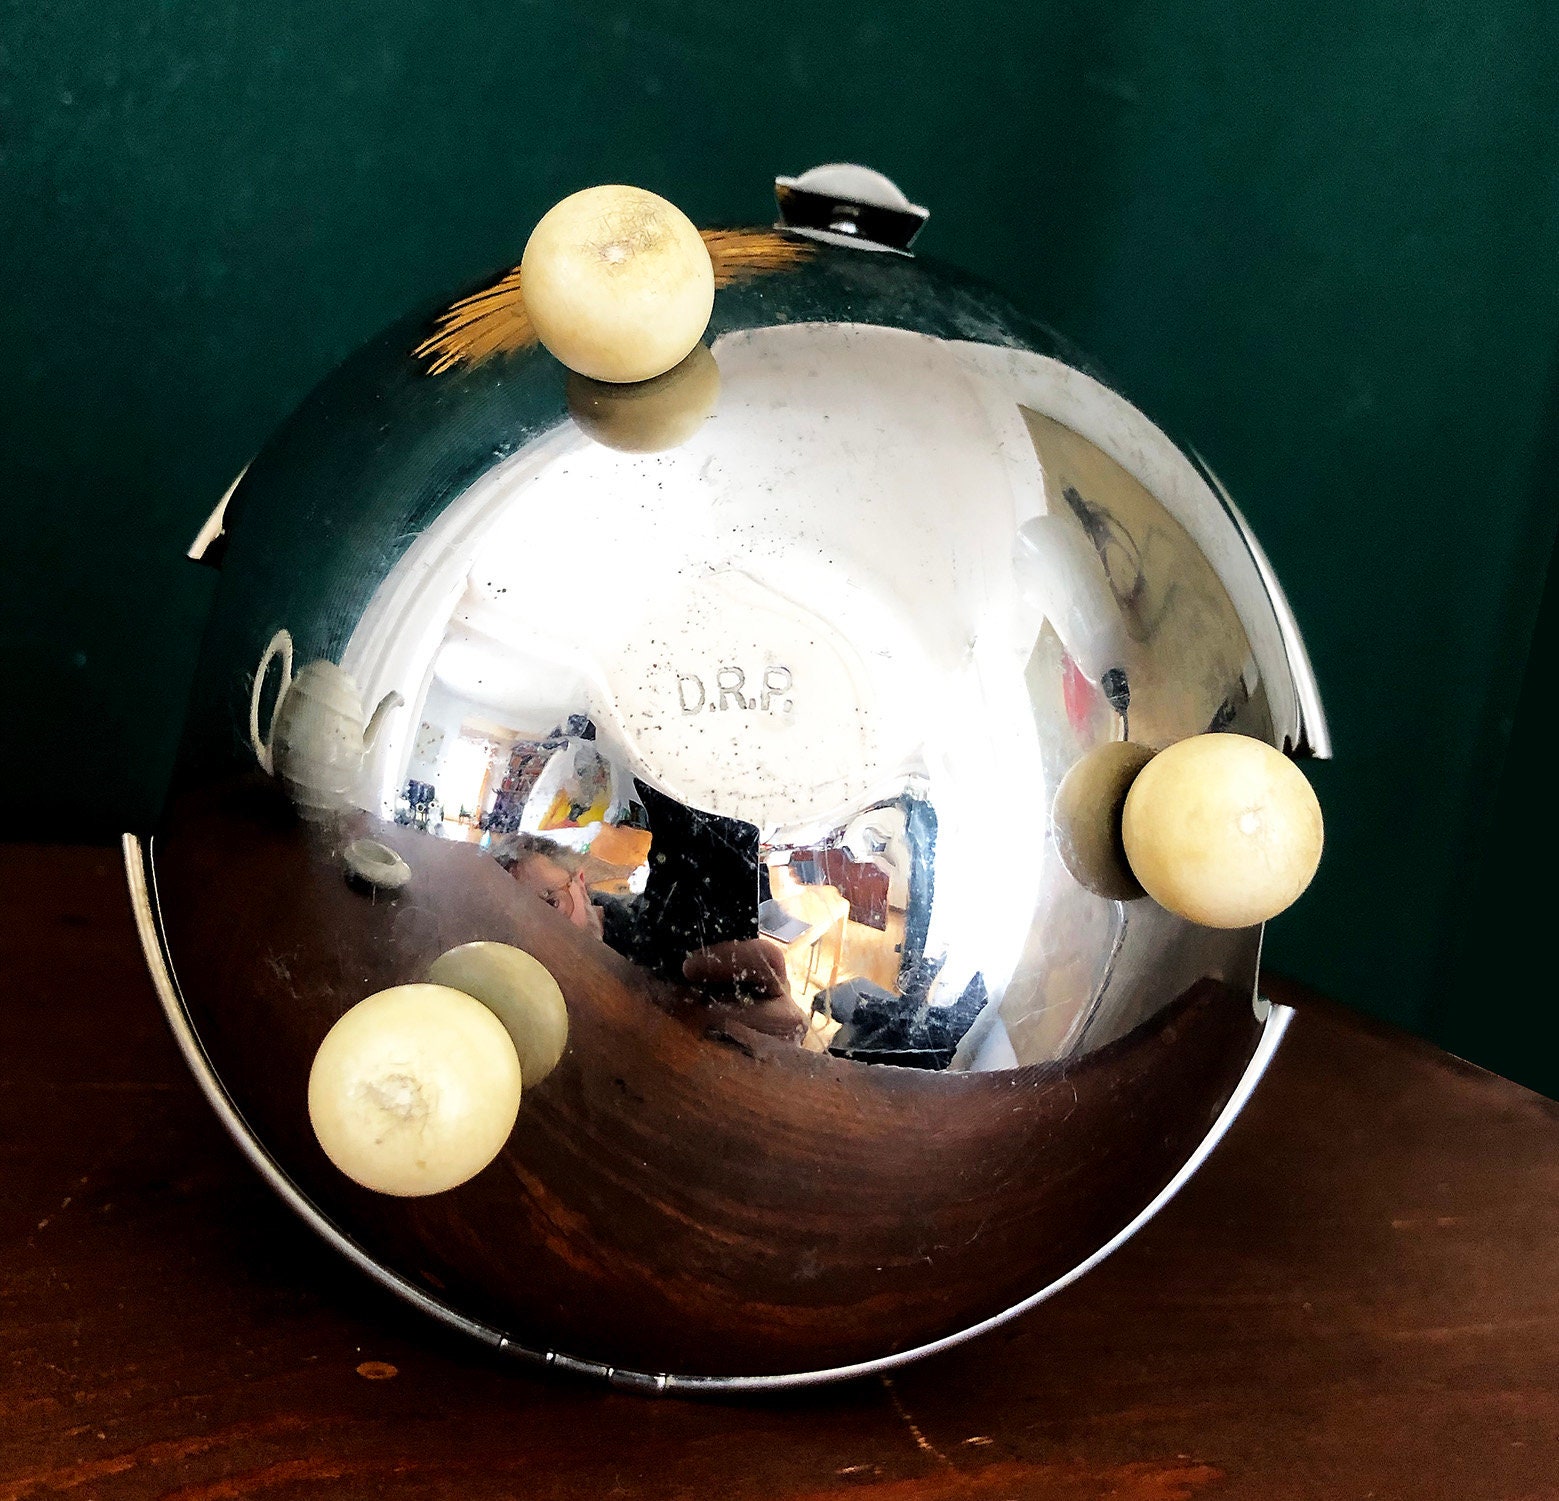 Art Deco Ball Thermal Teapot, Bauscher D.R.P. With Chrome Thermal Cover,  1930s, Pre-war Version Metal, Bauhaus, Felt Insulation, Vintage 